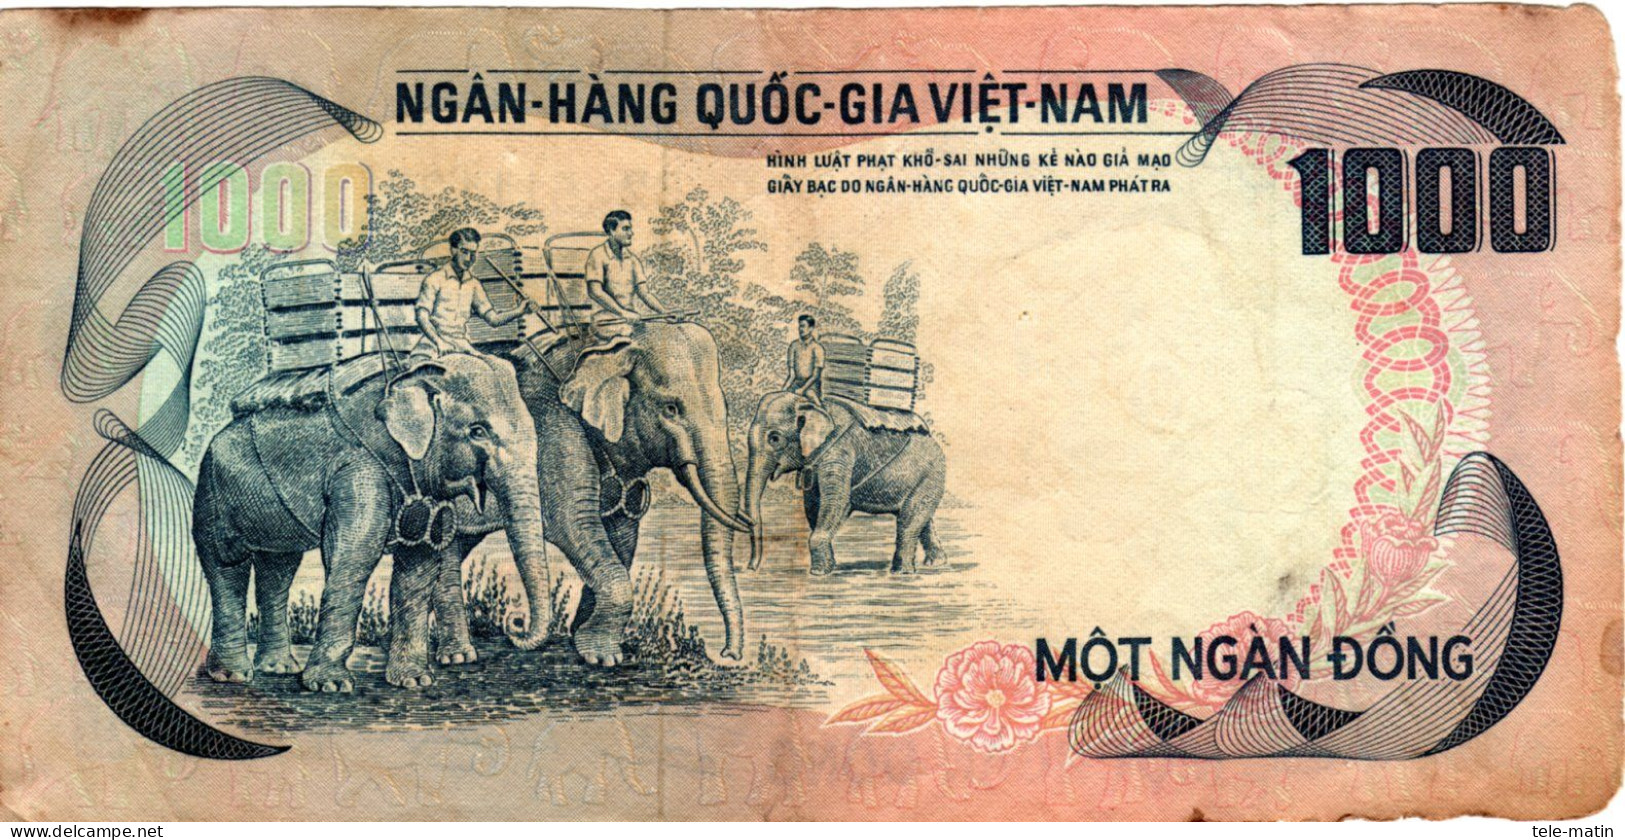 24 billets du Viet-Nam